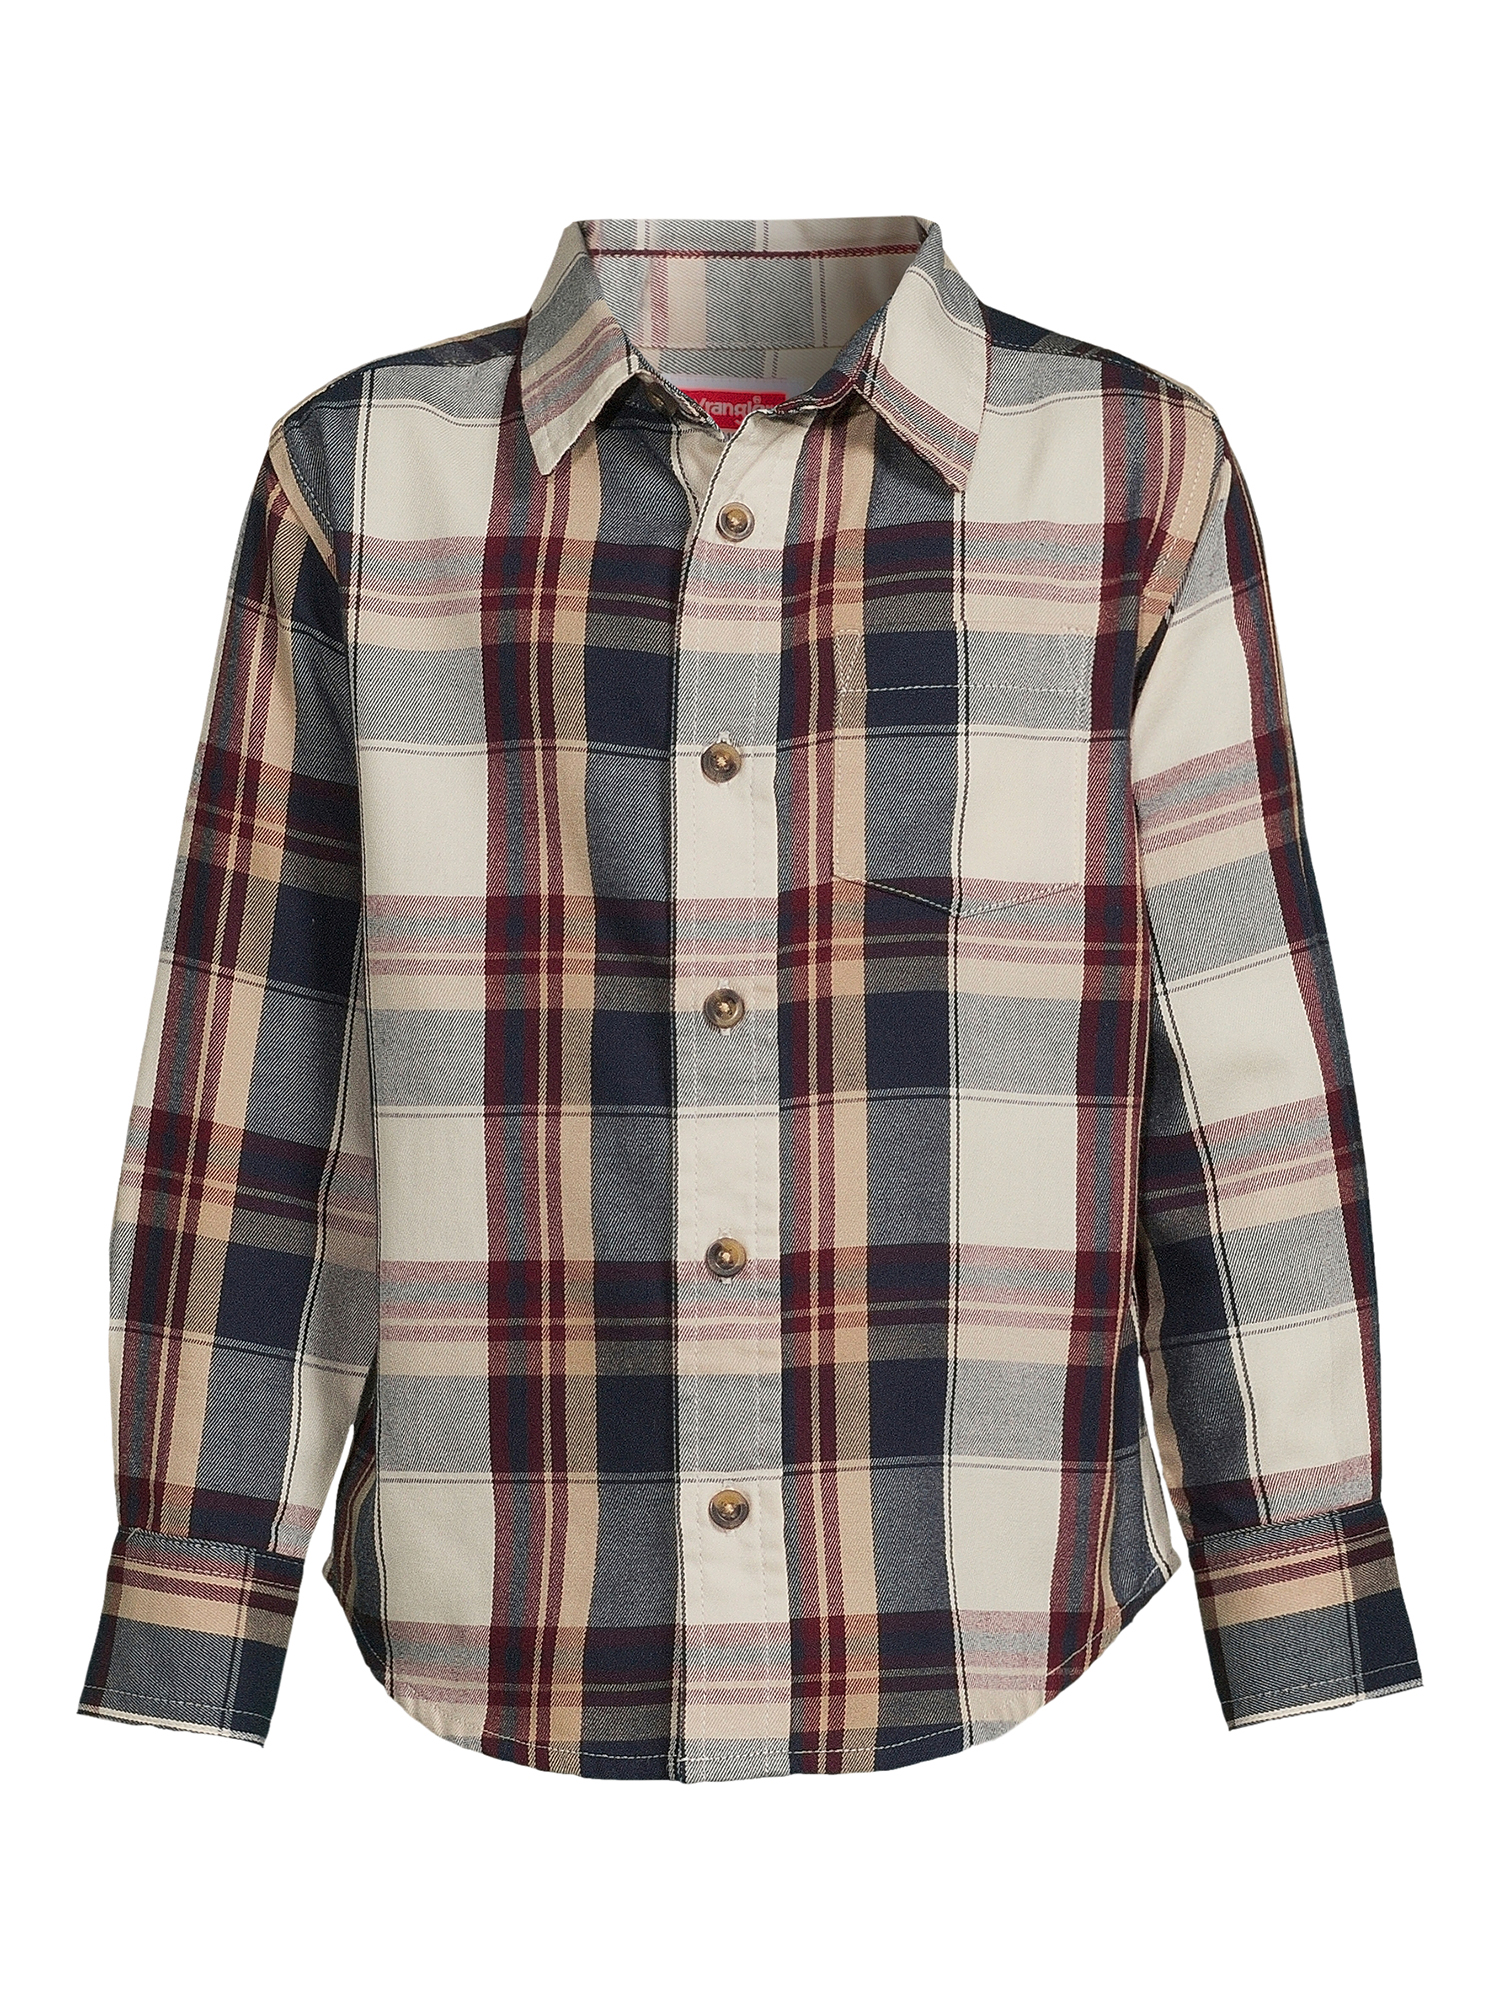 Wrangler Boys Long Sleeve Button-Up Twill Shirt, Sizes 4-18 & Husky - image 2 of 5